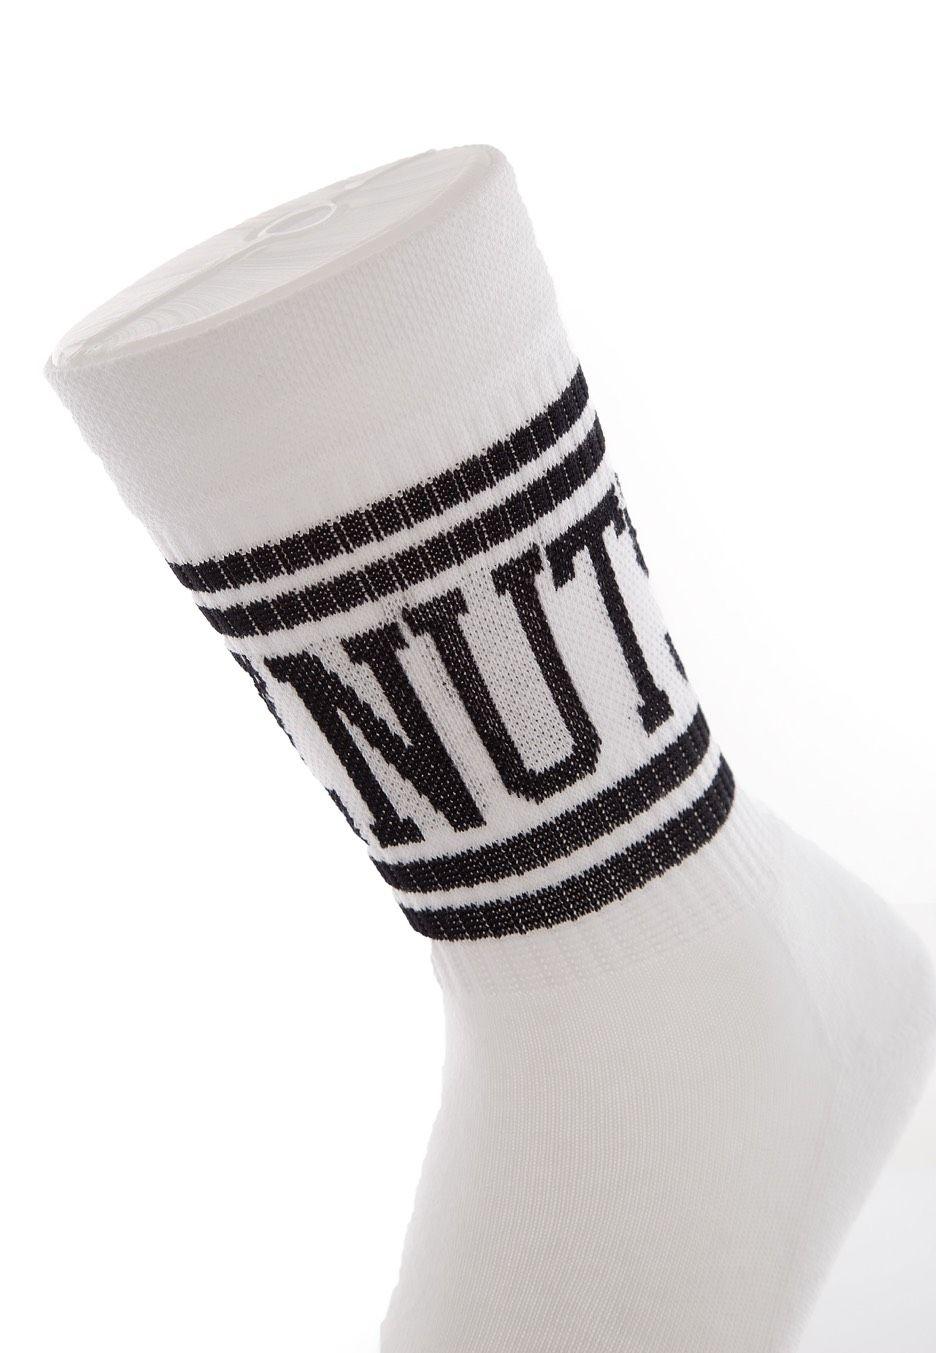 White Socks Logo - Deez Nuts White.com US